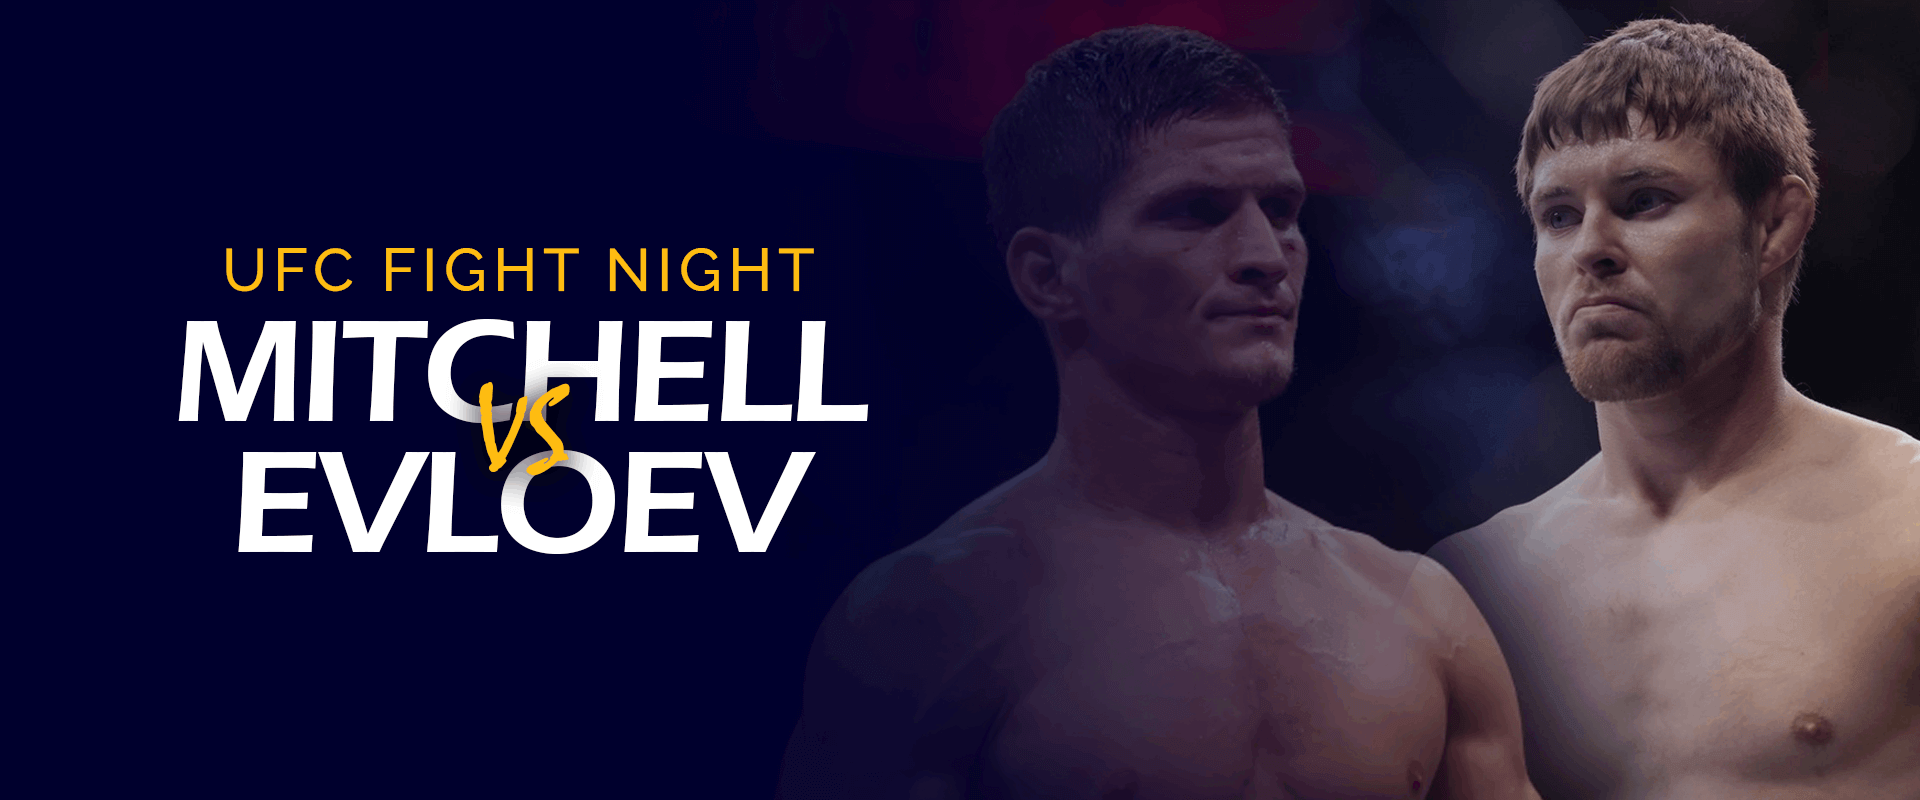 UFC Dövüş Gecesi - Mitchell, Evloev'e Karşı